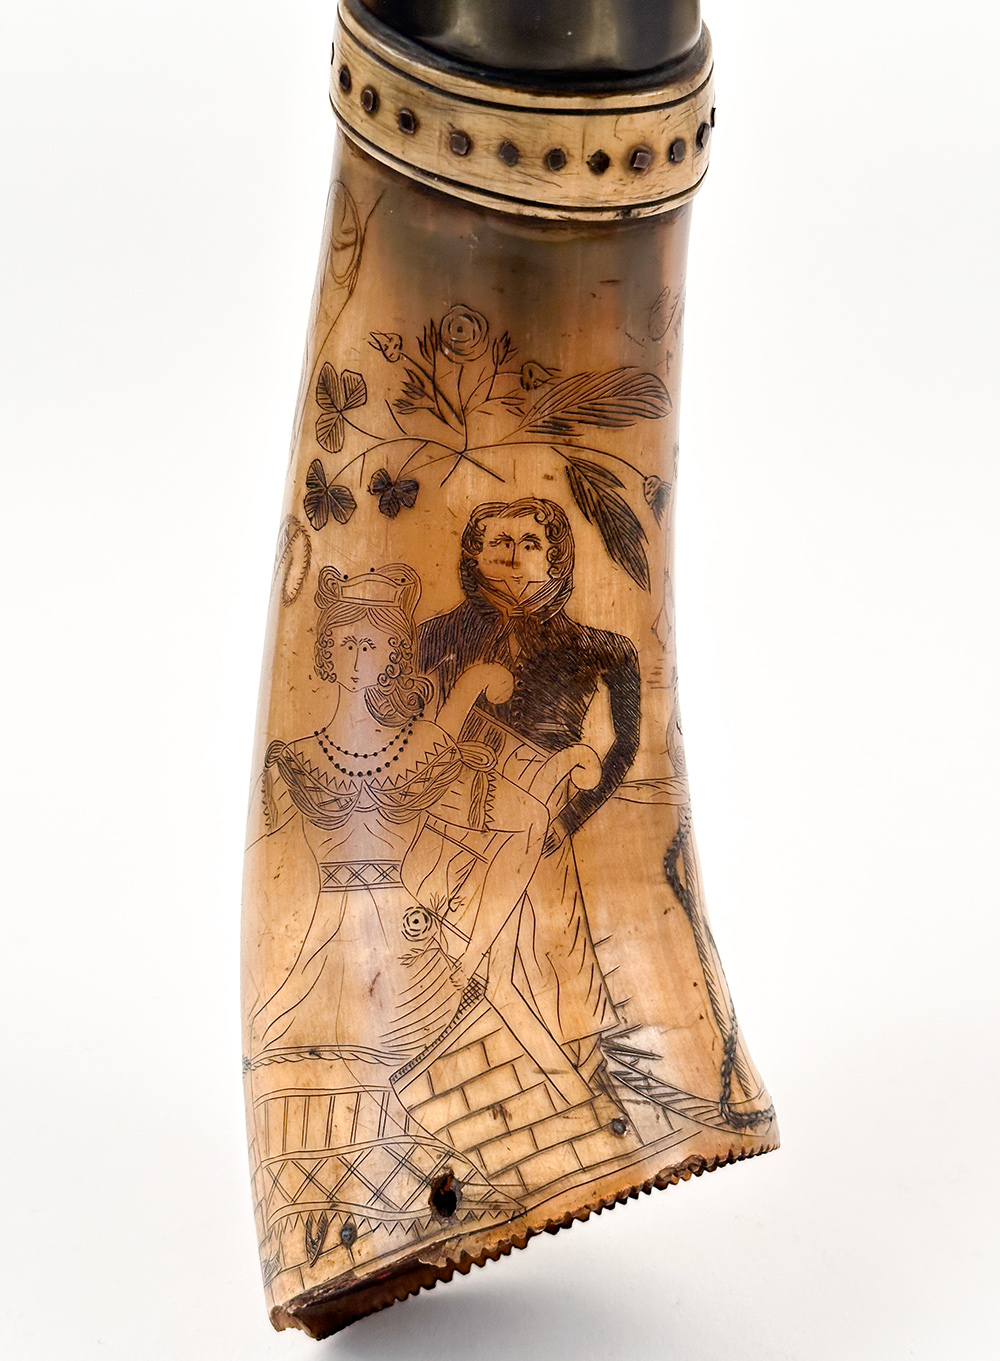 19th century folk art carved powderhorn sailors valentine